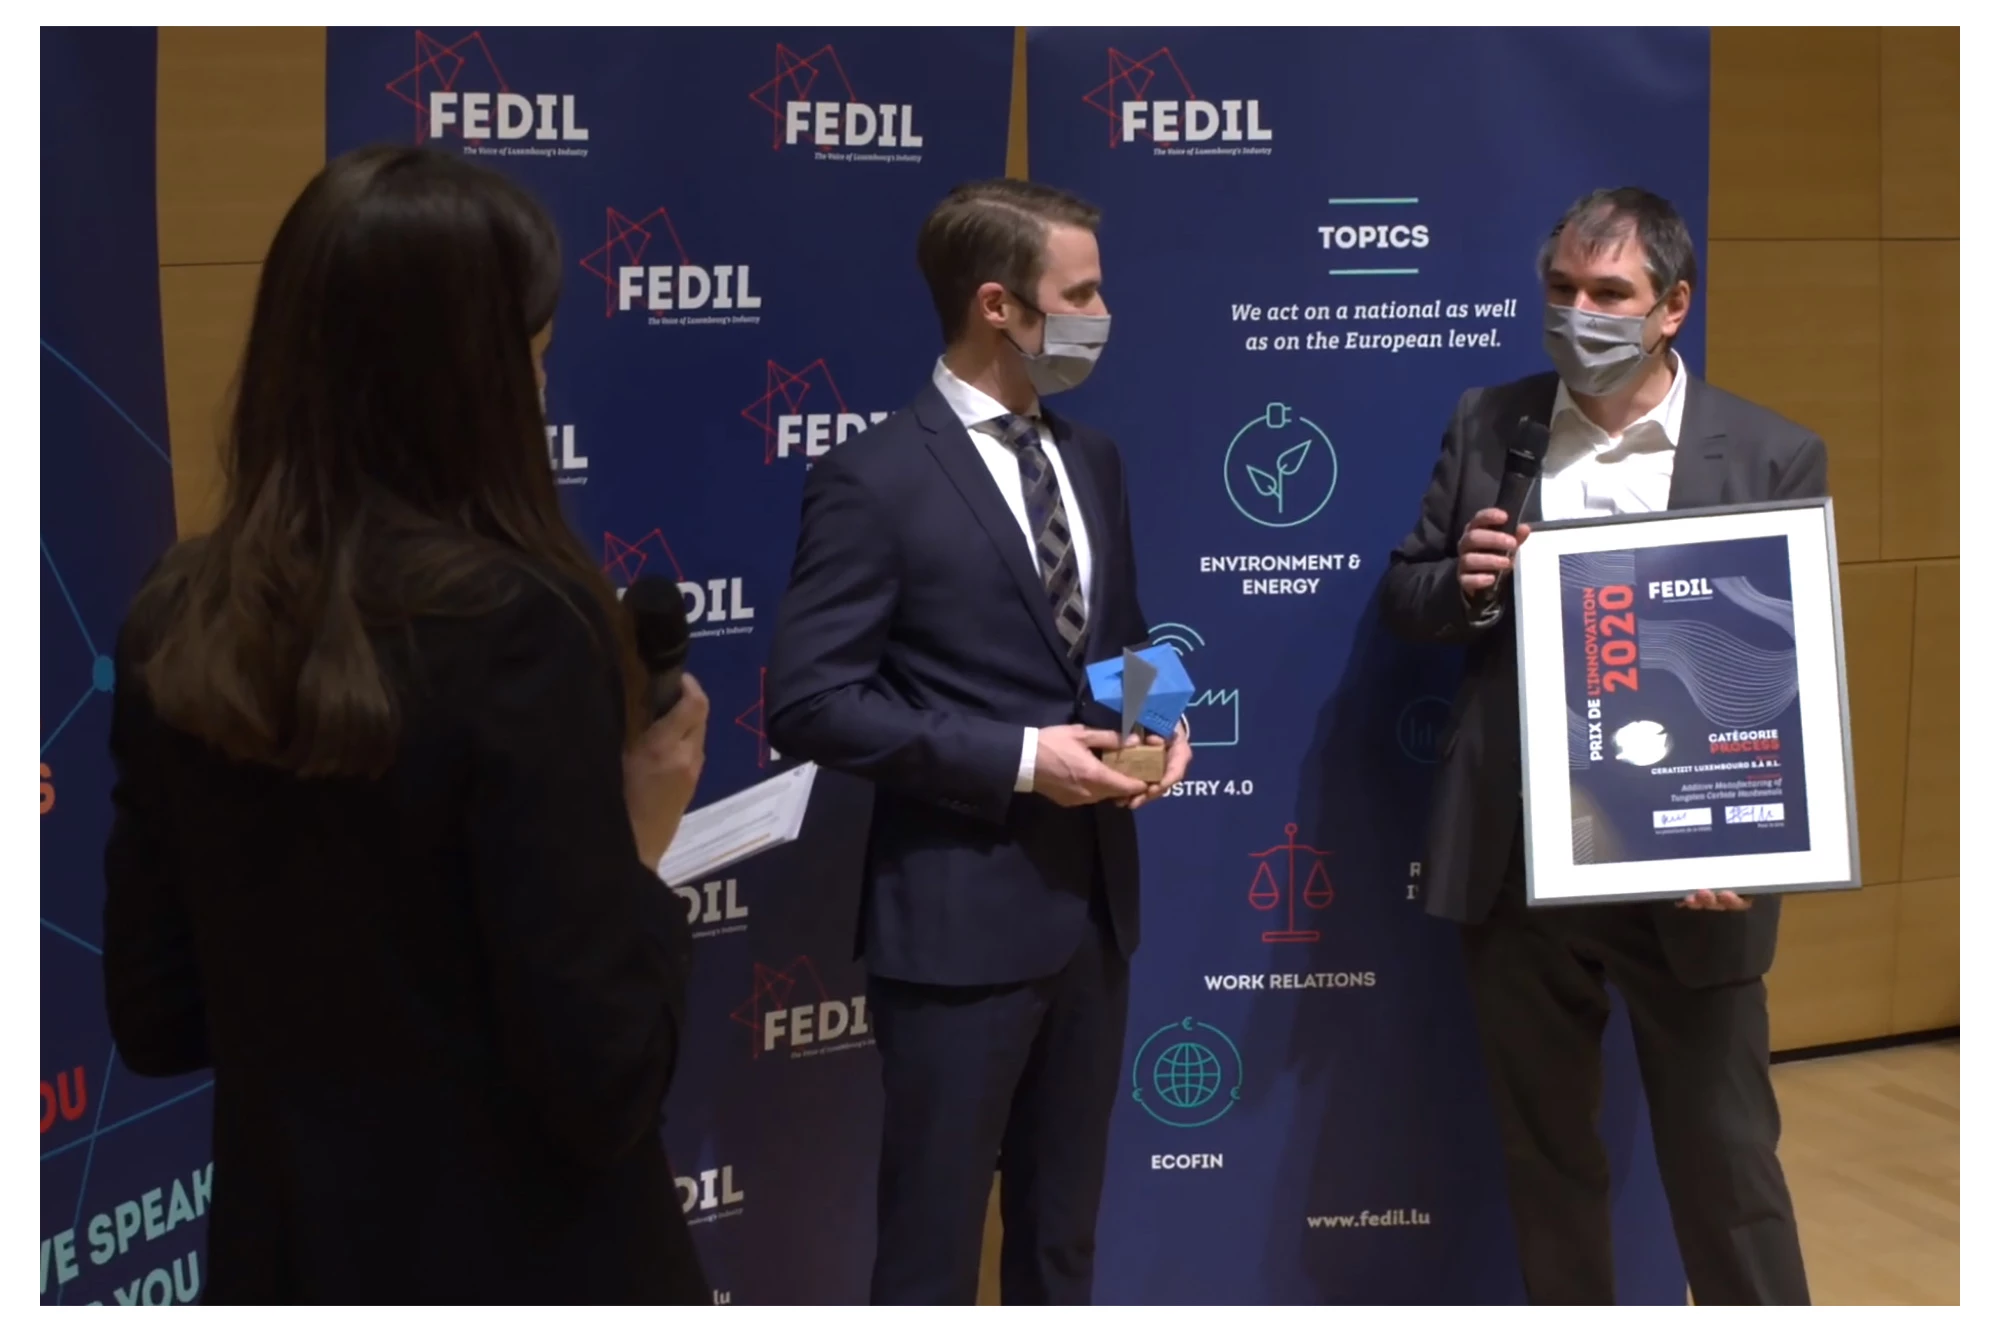 Innovation Award of the FEDIL business federation